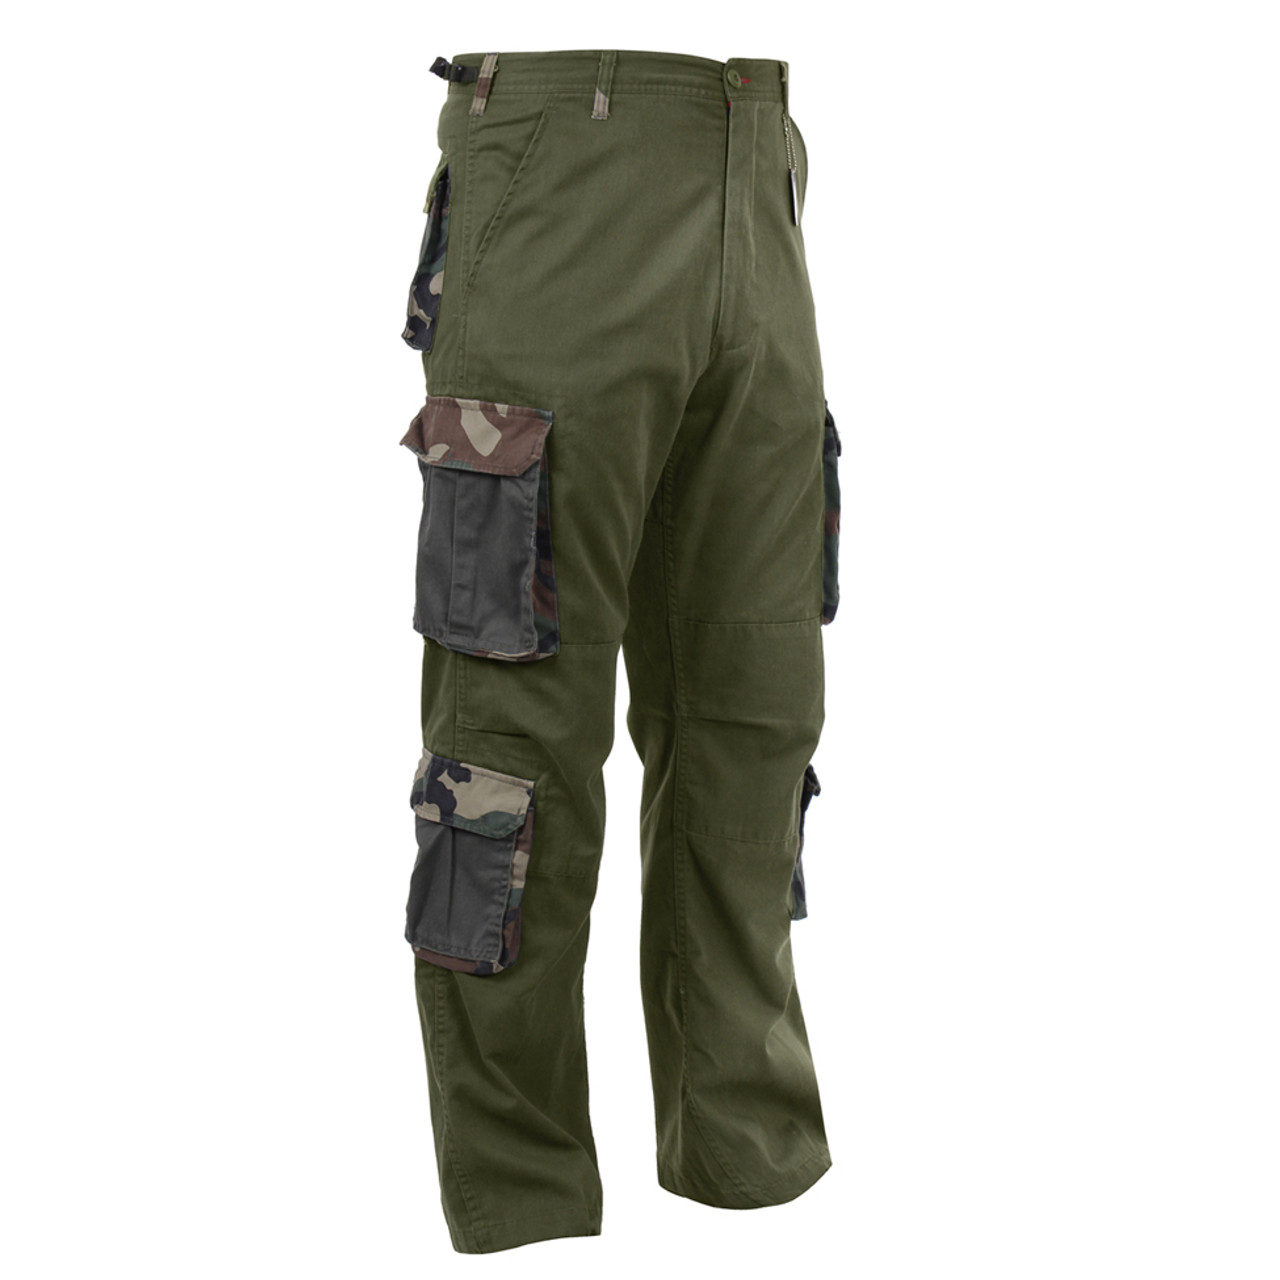 Shop Basic Four Pocket Fatigue Pants - Fatigues Army Navy Gear